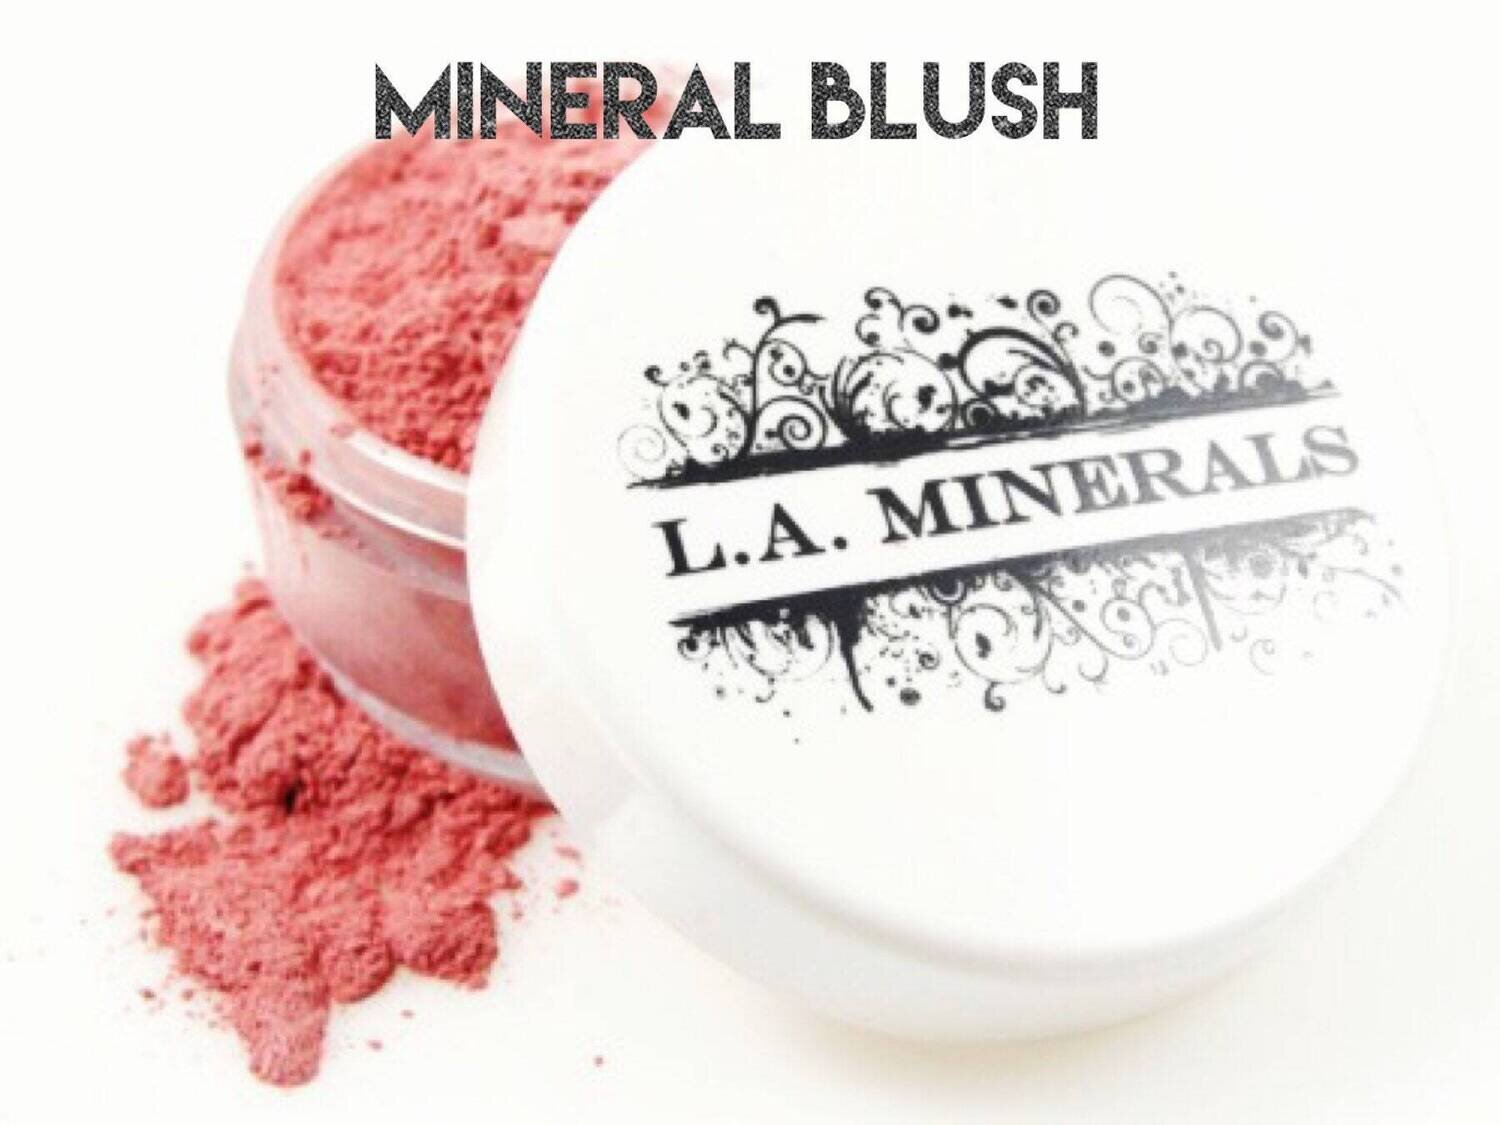 Mineral Blush - Natural Mineral Makeup Blush thats Made in USA - Pink Blush - Matte Blush - Blush and Glow